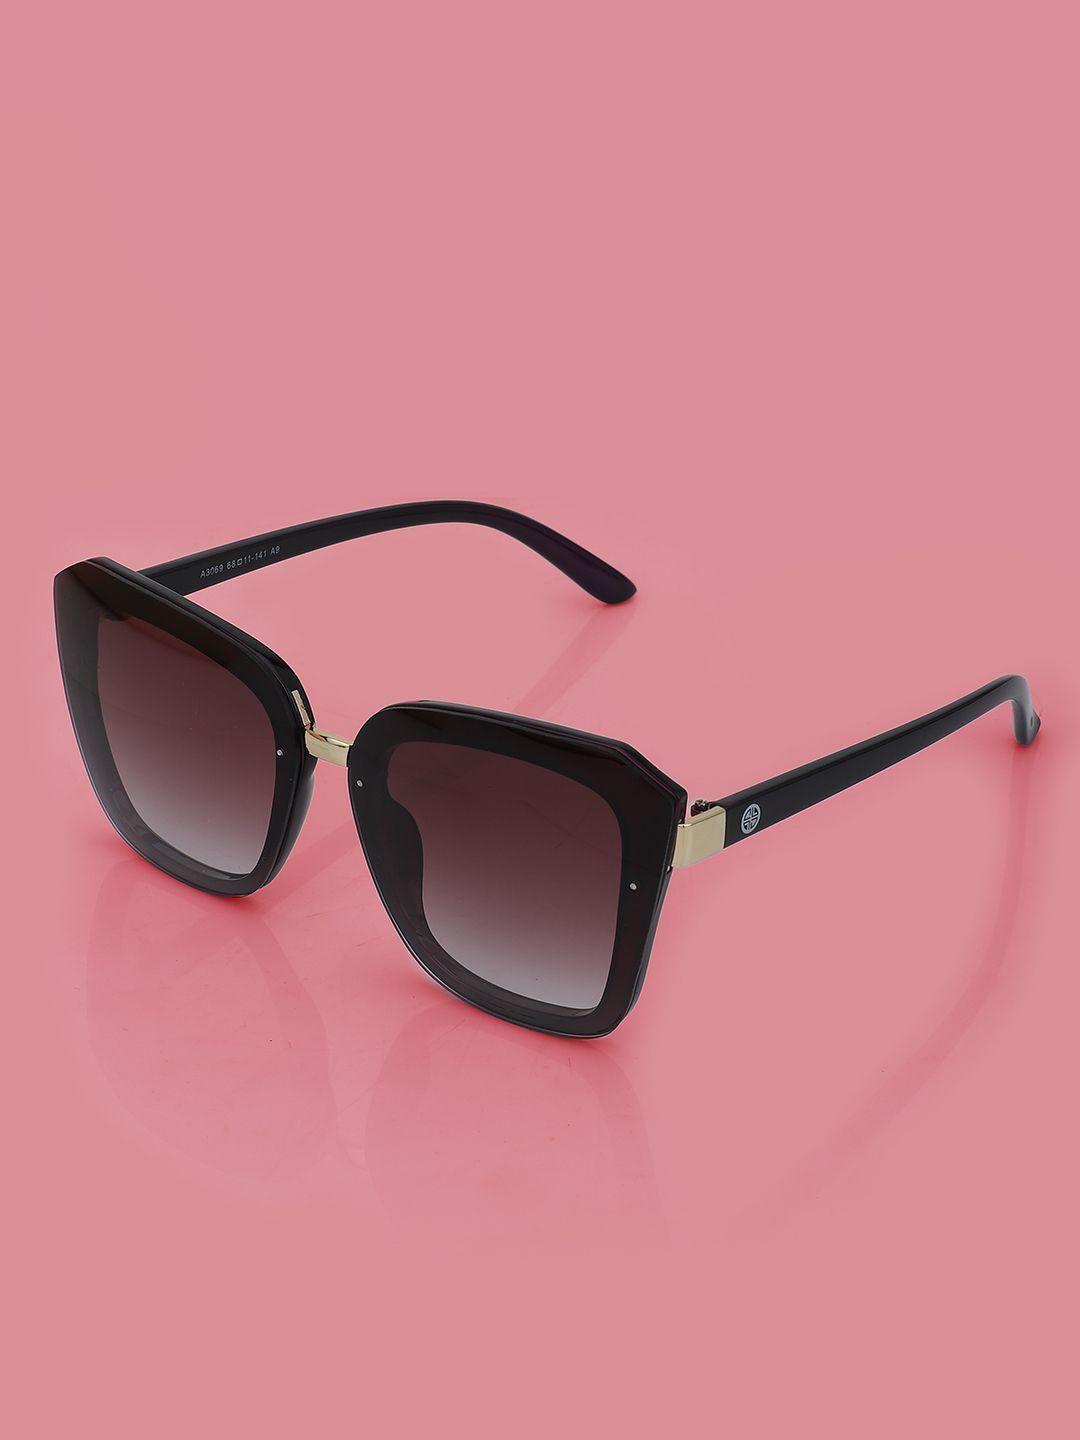 carlton-london-women-oversized-sunglasses-a3069